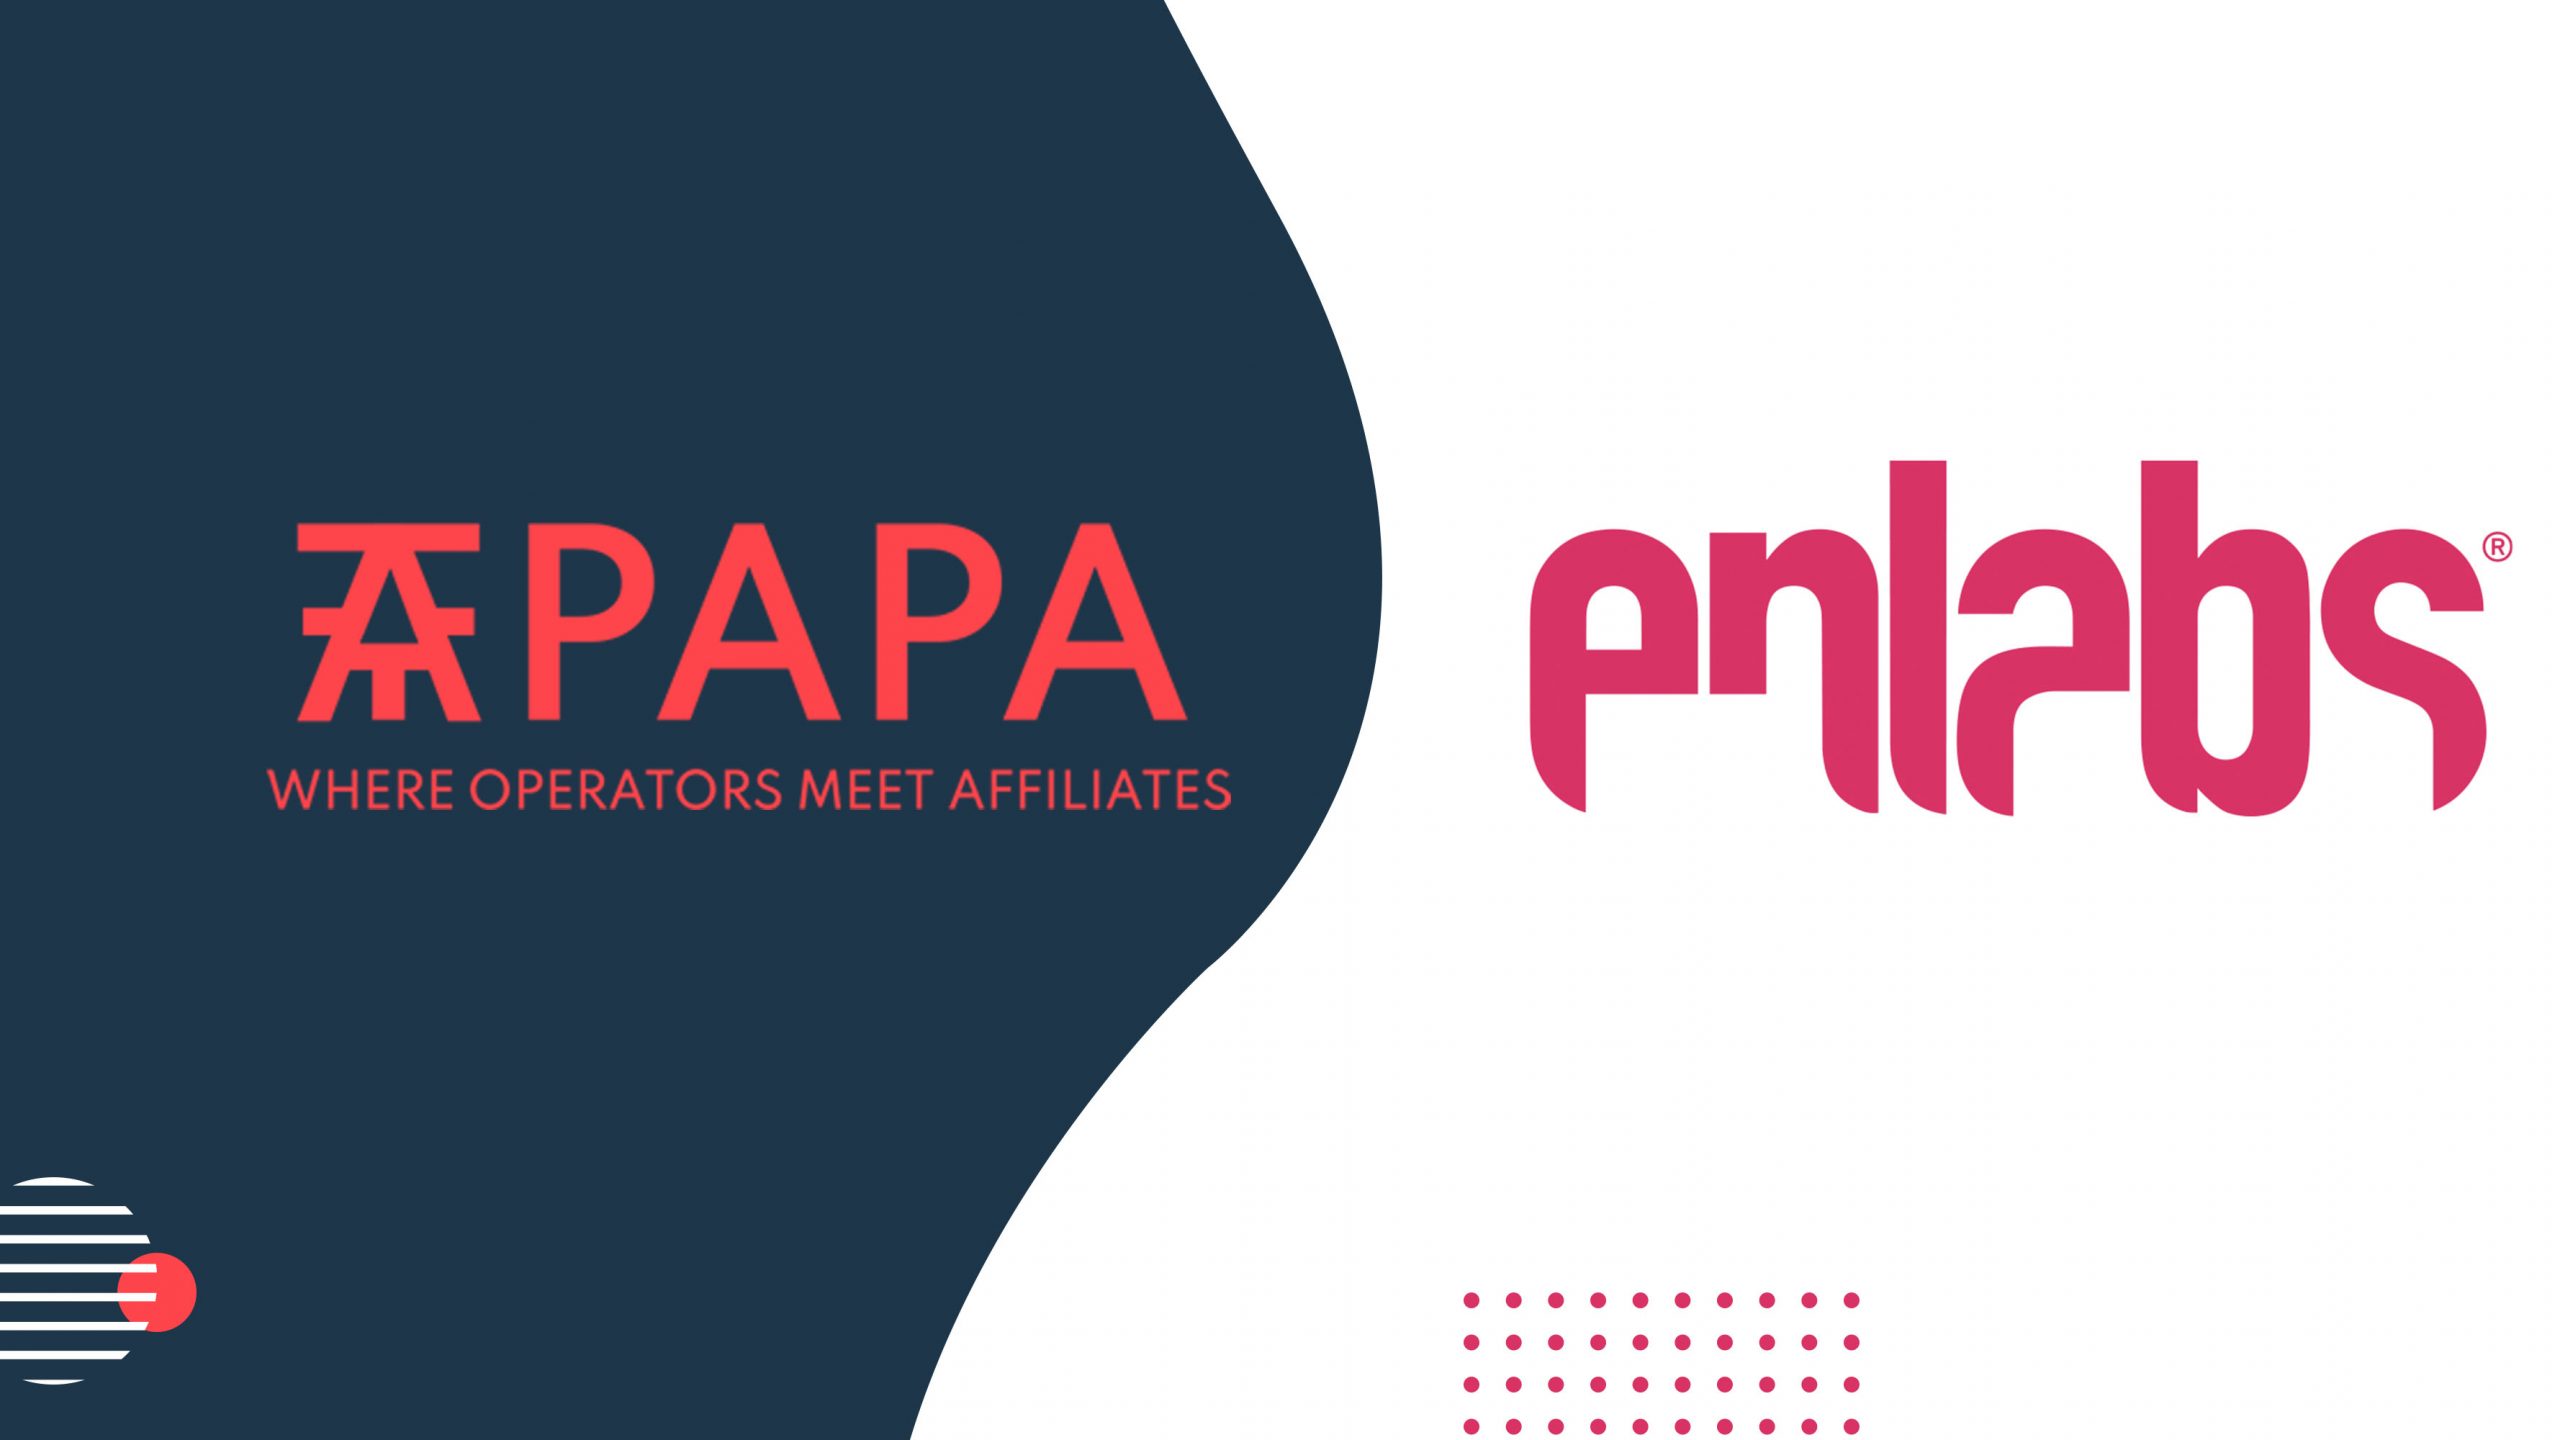 Enlabs strengthens its affiliates presence via AffPapa